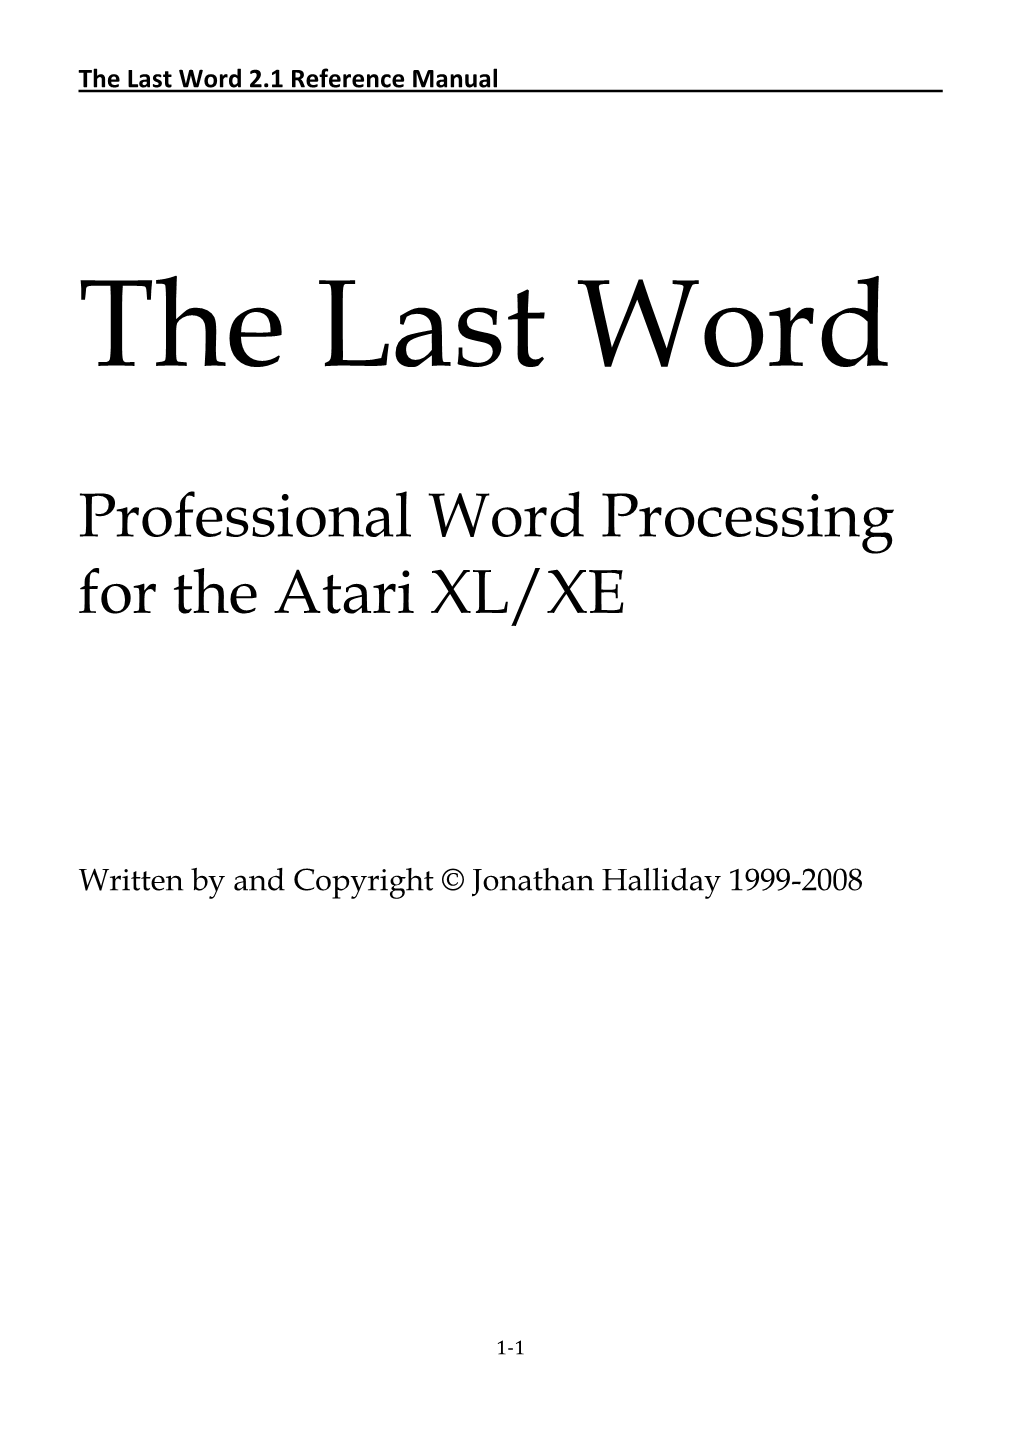 The Last Word 2.1 User Manual